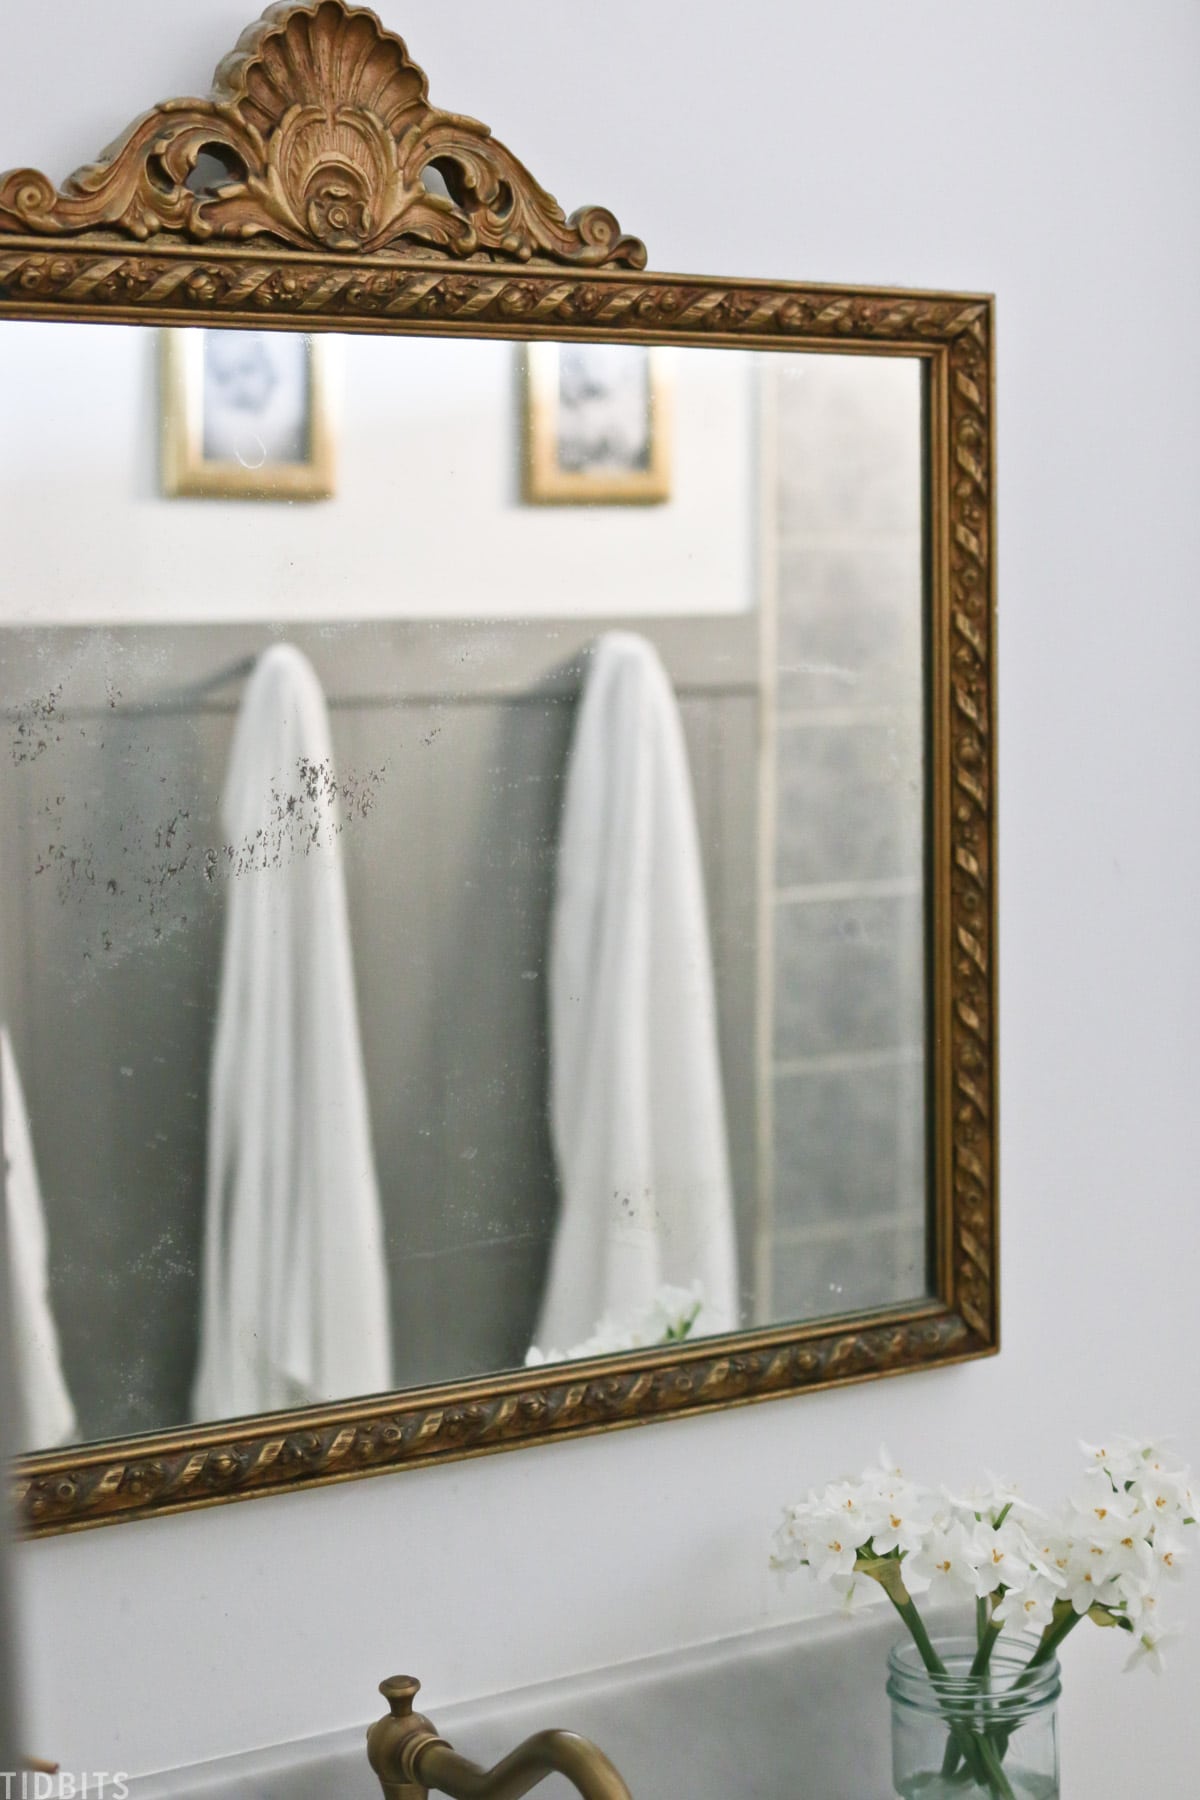 mirror with bronze colored frame above bathroom sink in split bathroom